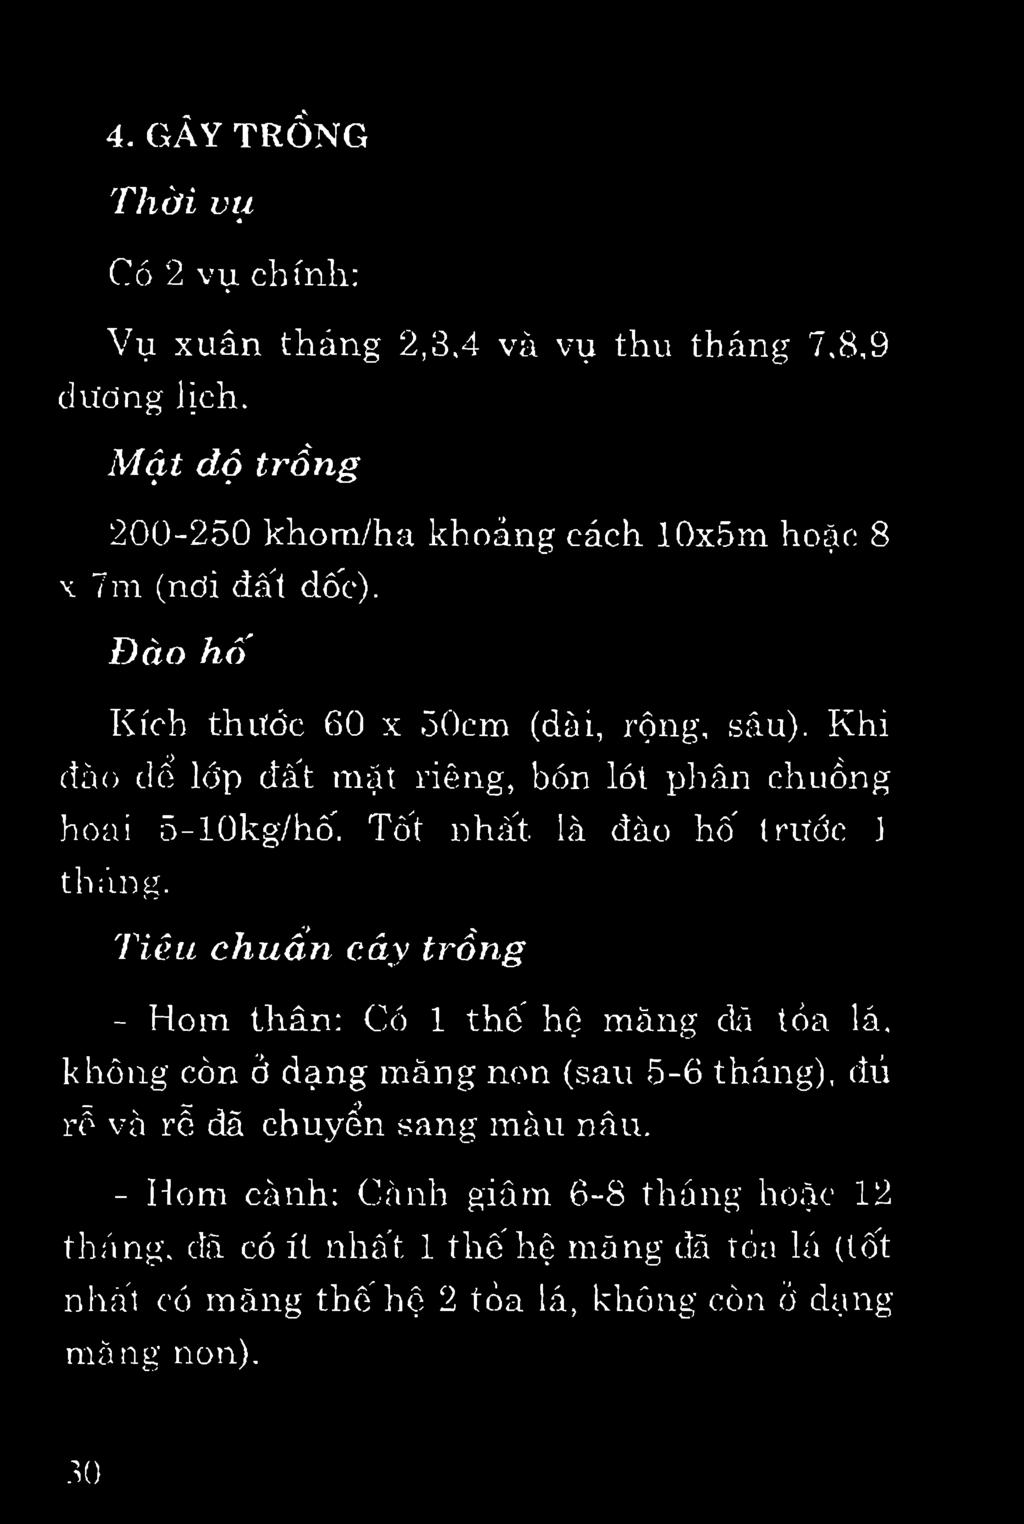 Tot nhat la dao ho trade ) thang. Tien chuan cay trong - Horn than: Co 1 the he mang da toa la.